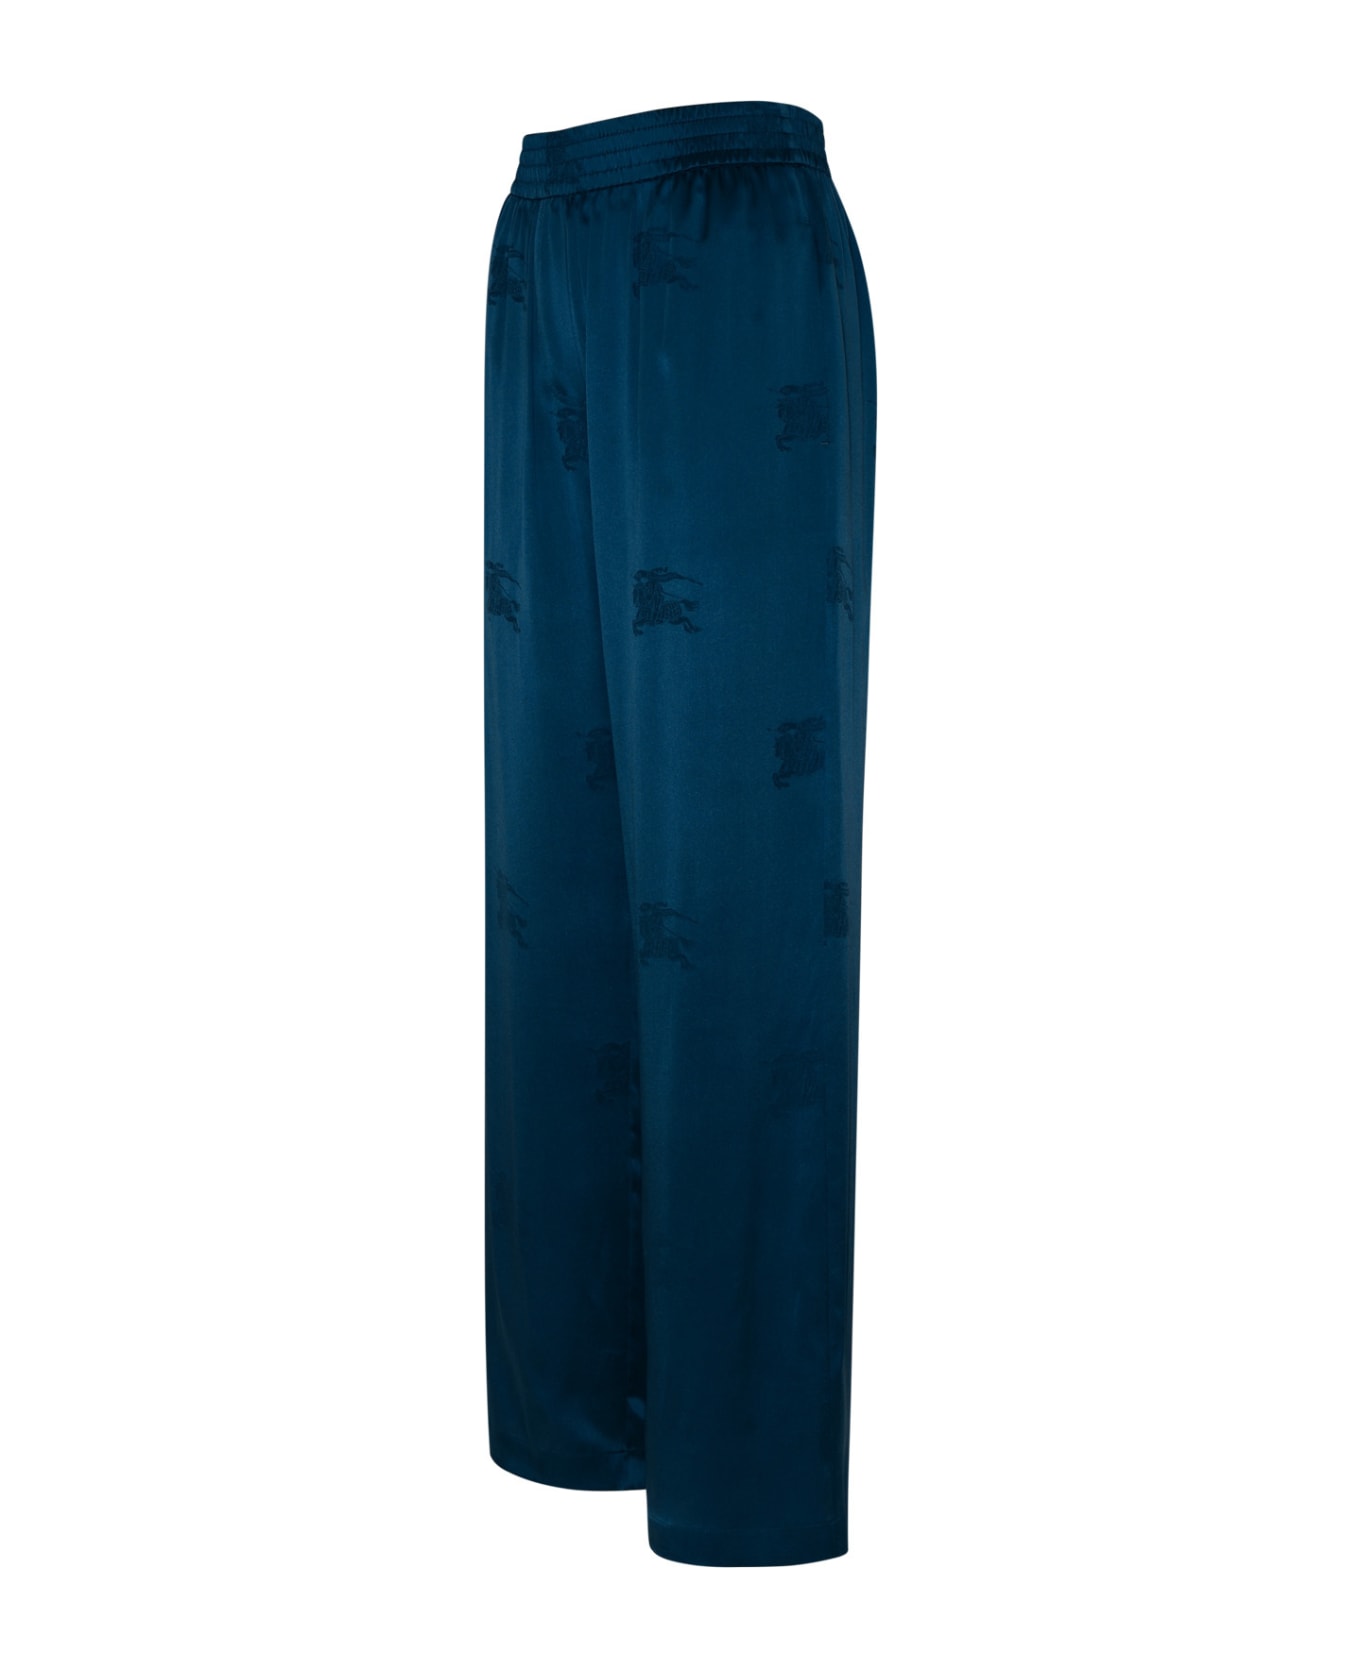 Burberry Unsead Navy Silk Pants - Muted navy ip pat